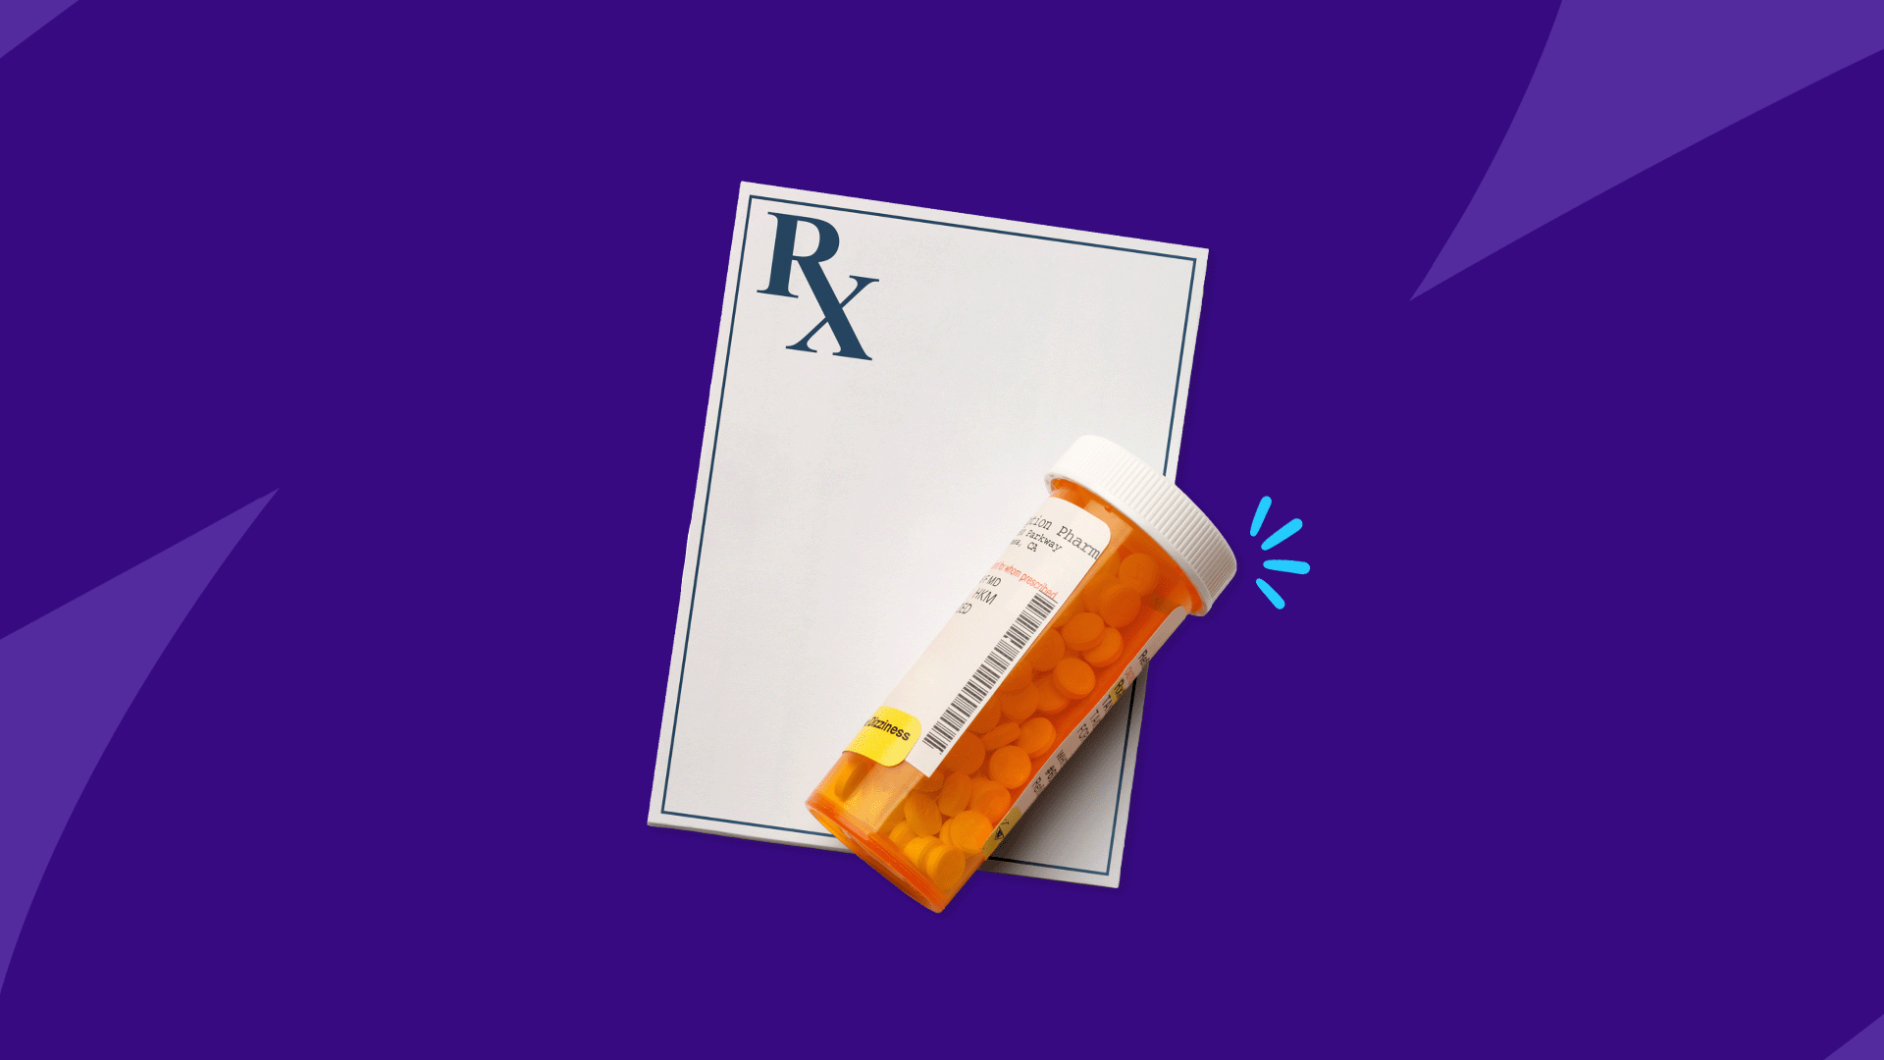 Rx prescription pad and Rx pill bottle: Lisinopril interactions